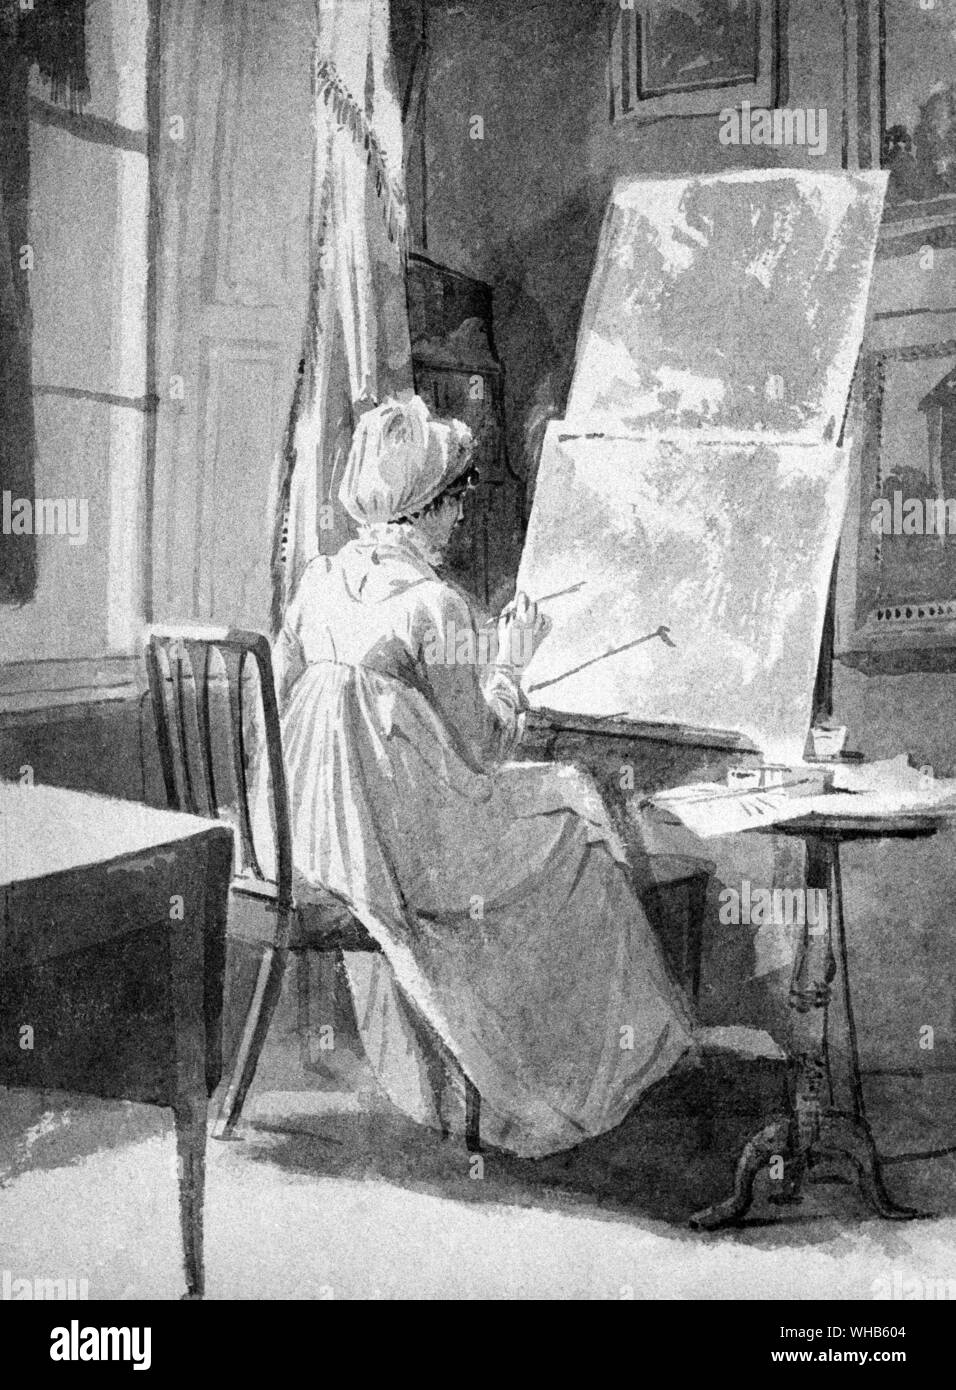 Jessy at Easel - Jesse Harden at her easel - a John Harden drawing - Harden, John (1772-1847) . . Stock Photo